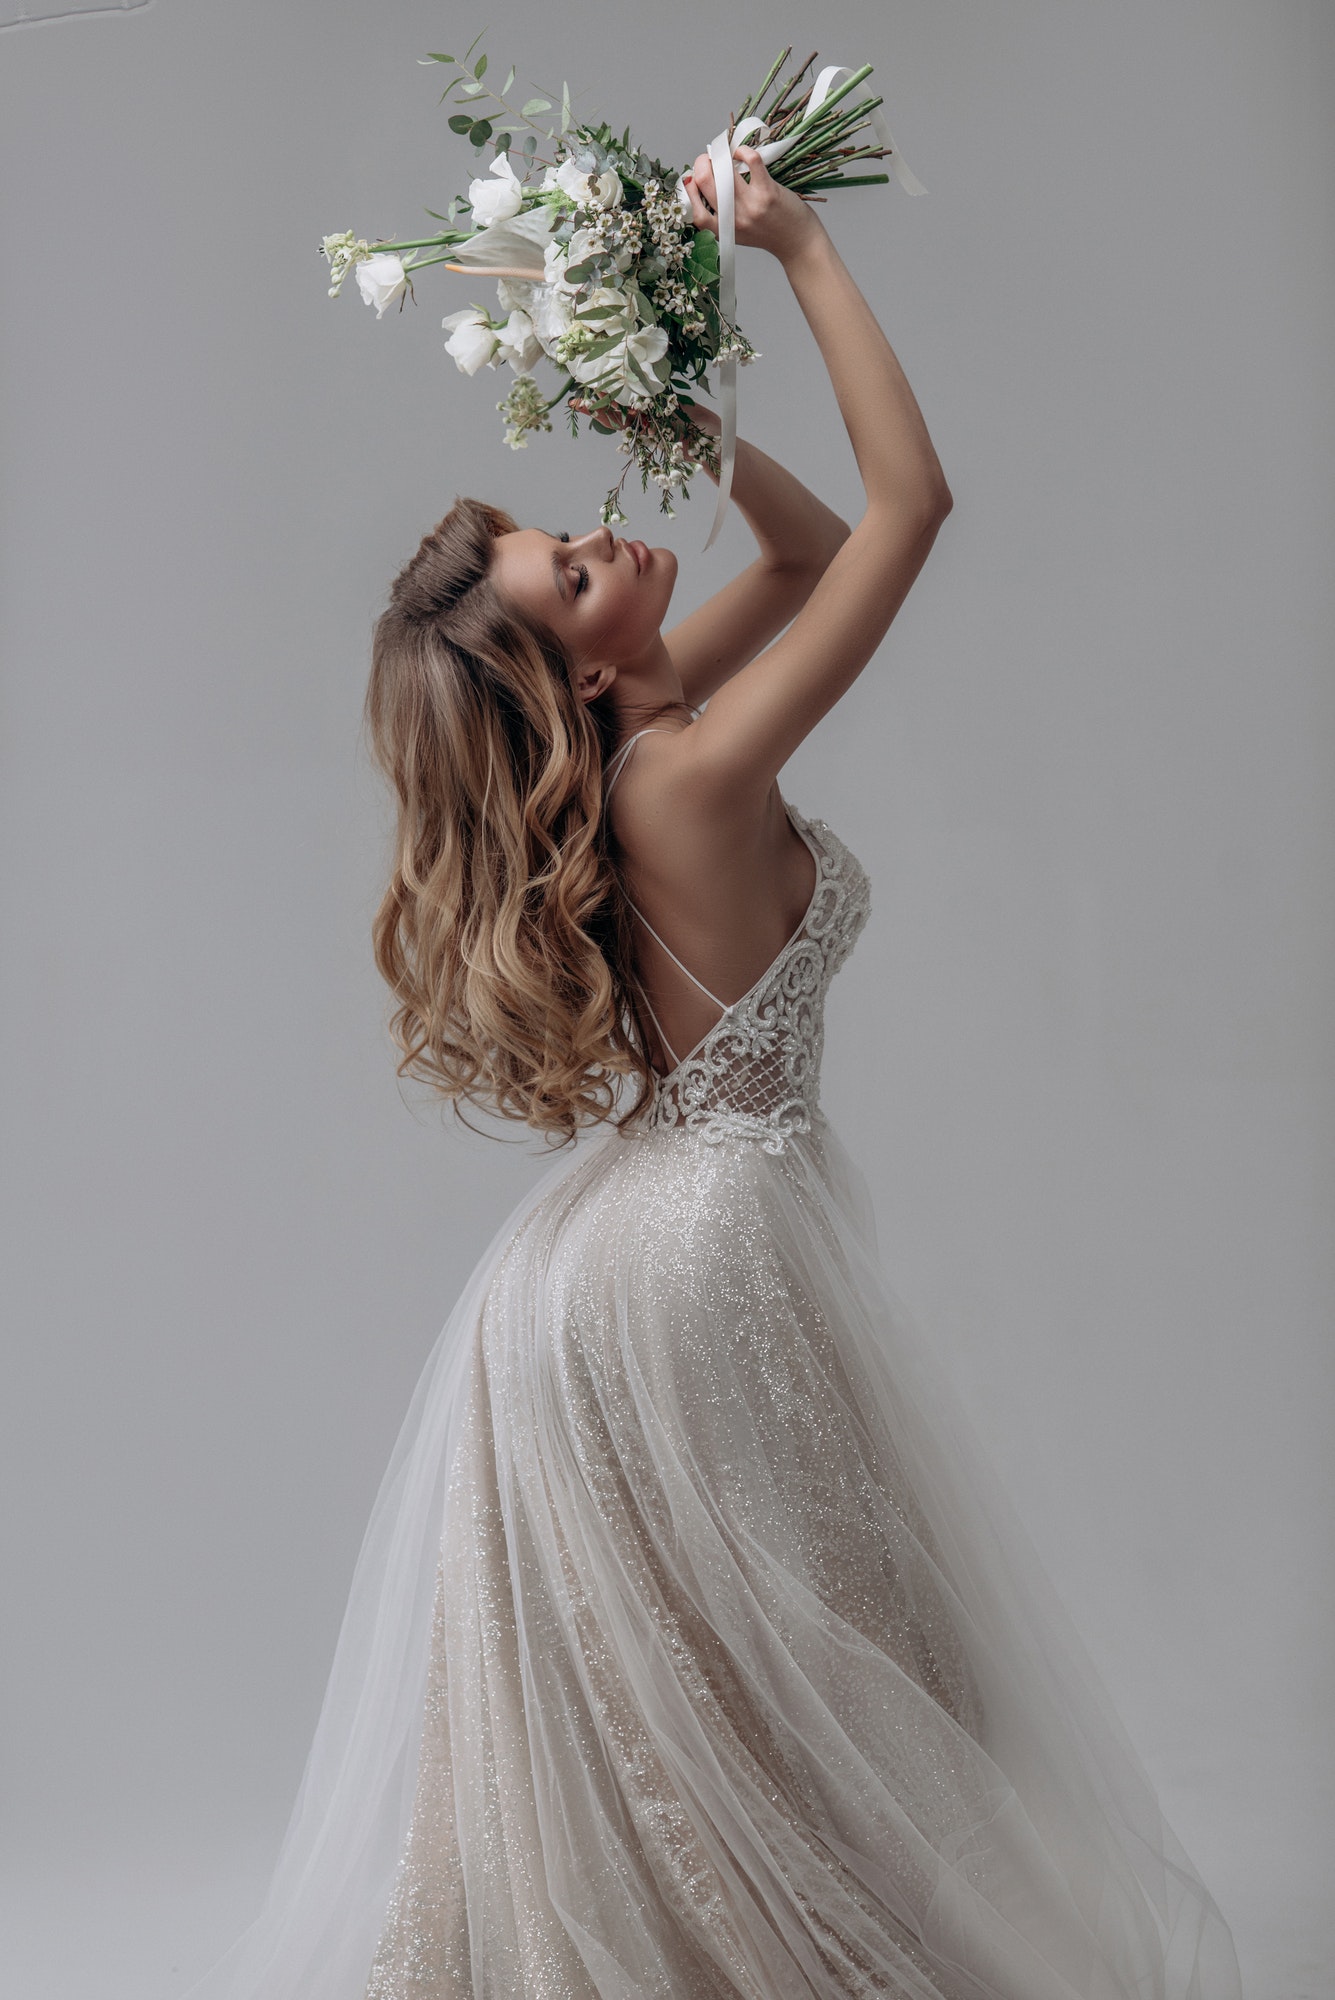 beautiful-sexy-blonde-bride-posing-in-wedding-dress-in-white-room.jpg